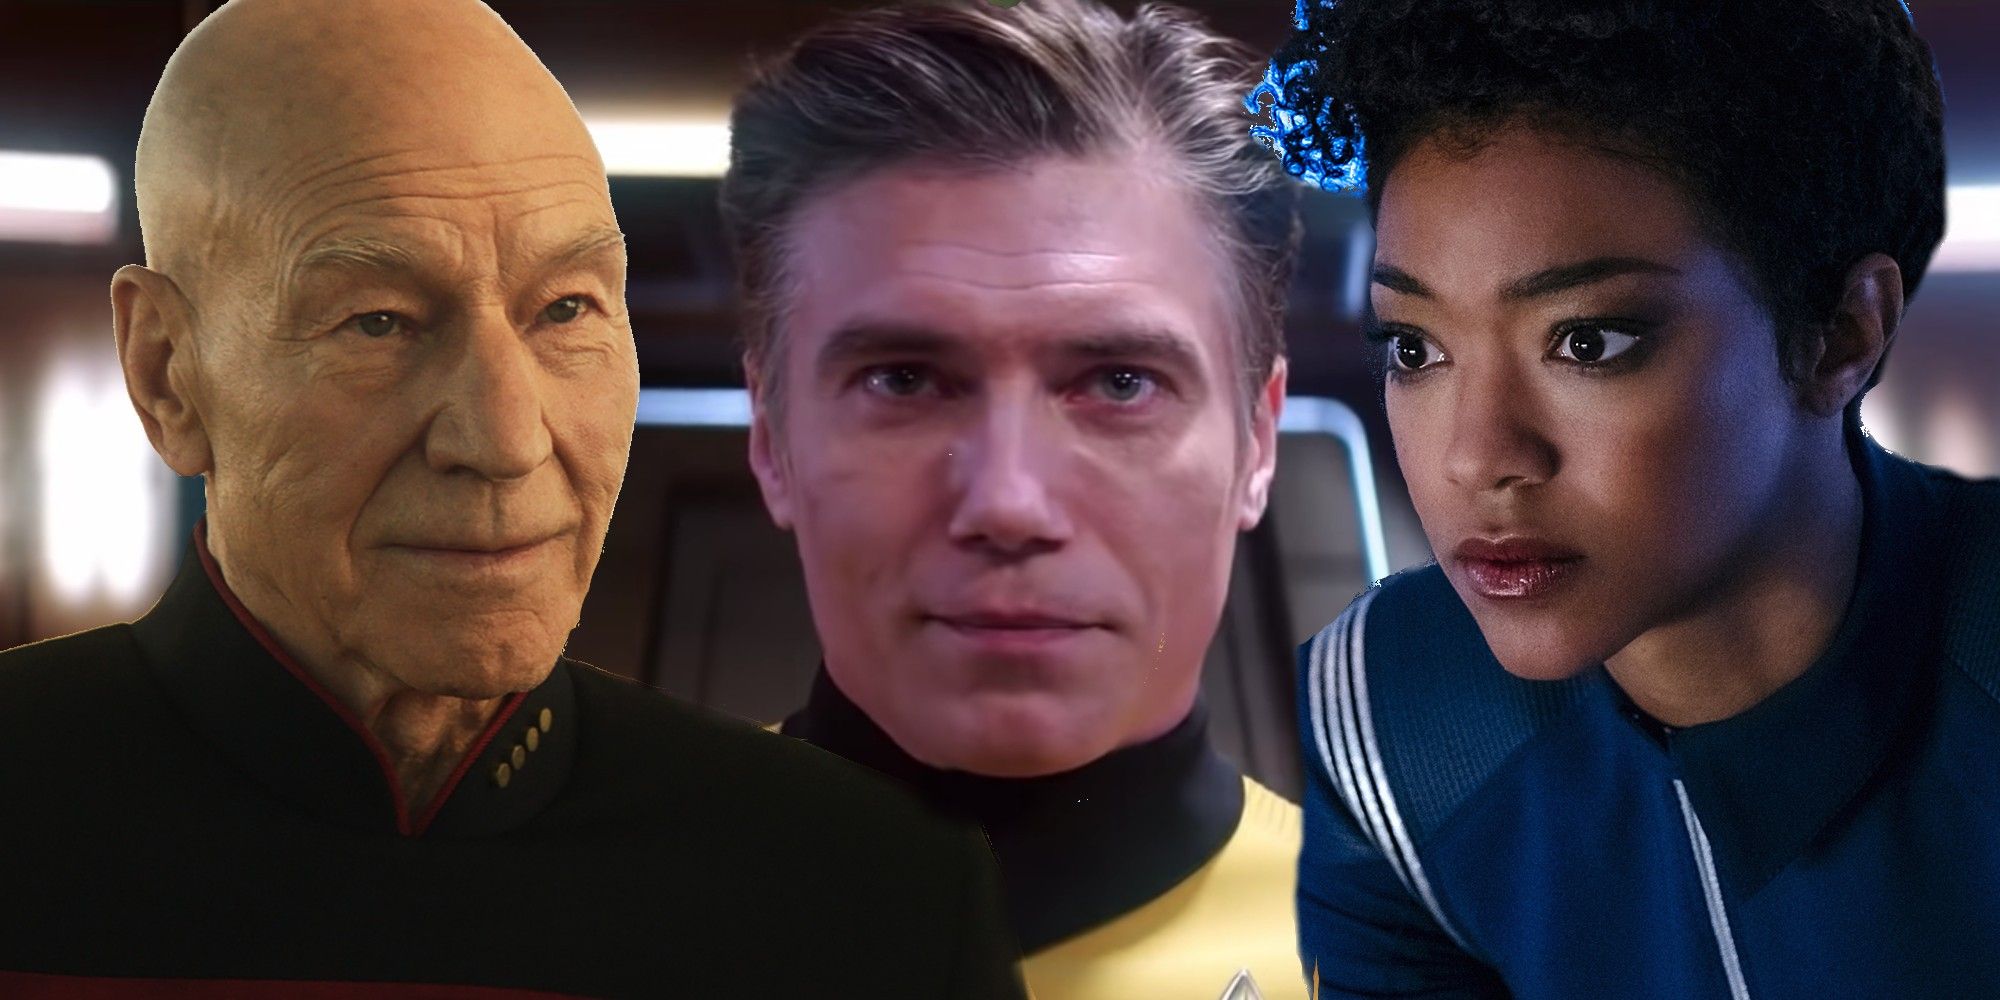 Patrick Stewart as Jean-Luc Picard in Star Trek, Anson Mount as Pike and Sonequa Martin Green as Michael Burnham in Discovery